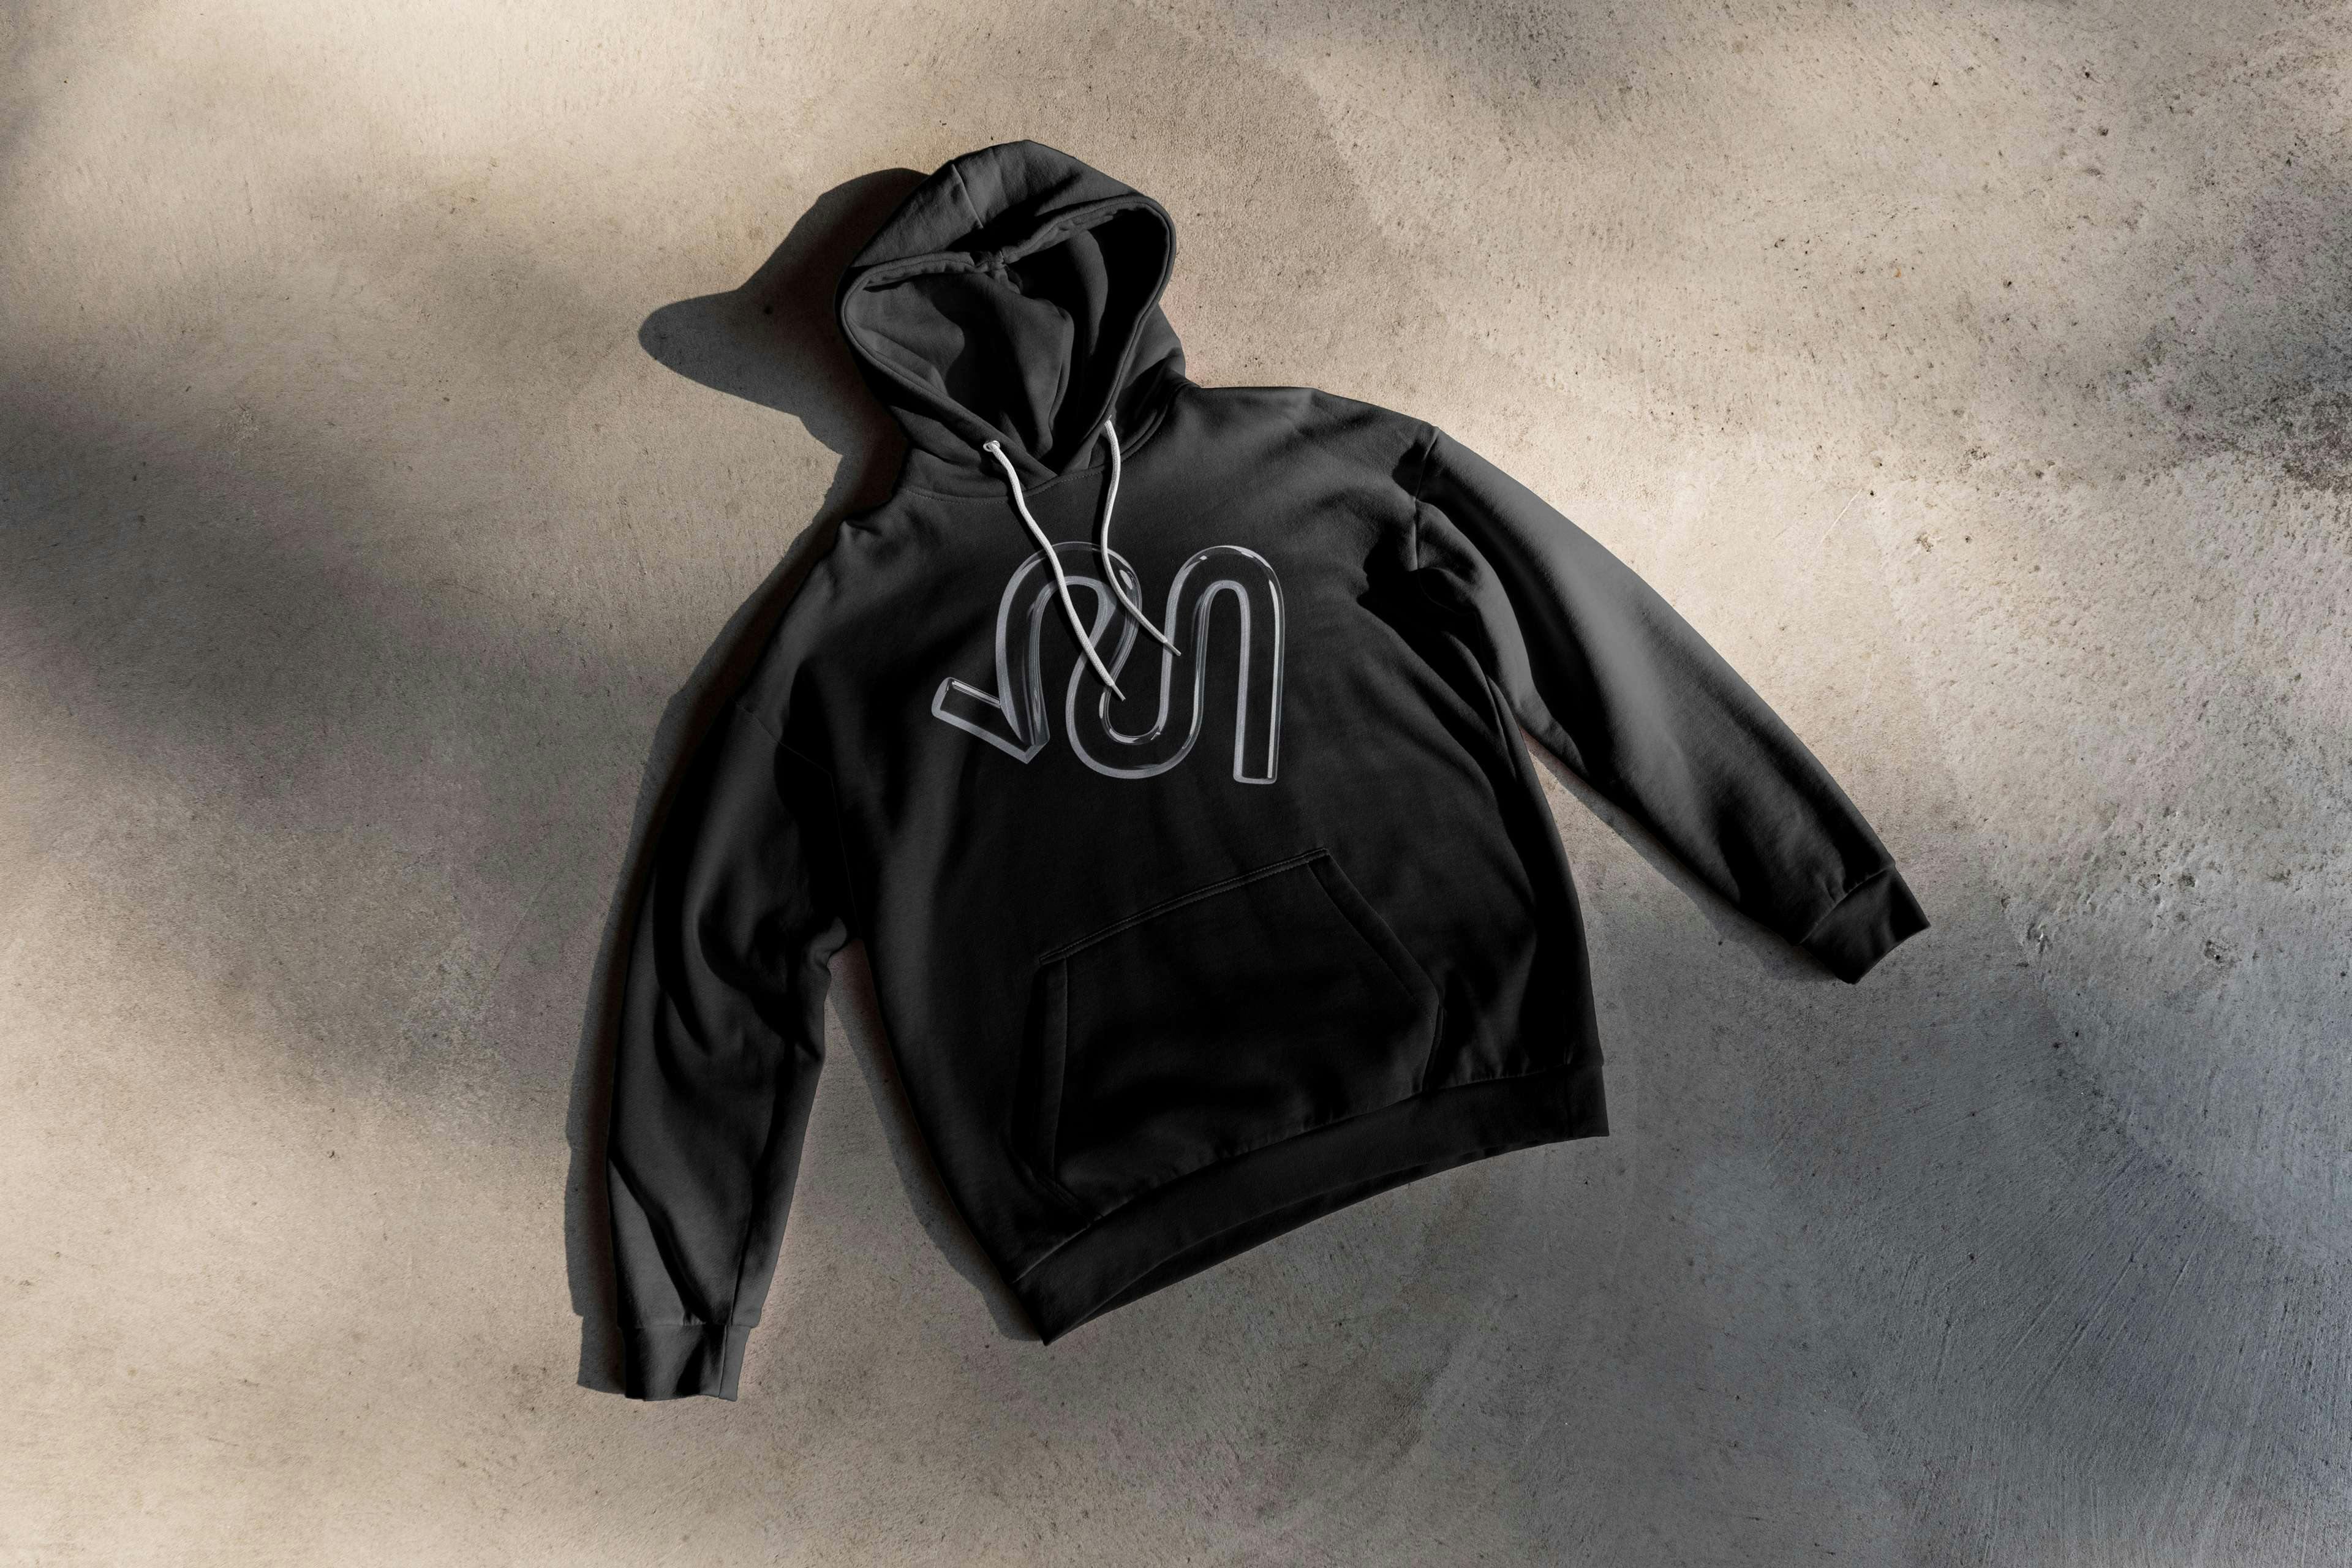 Mischief hoodie with logo design